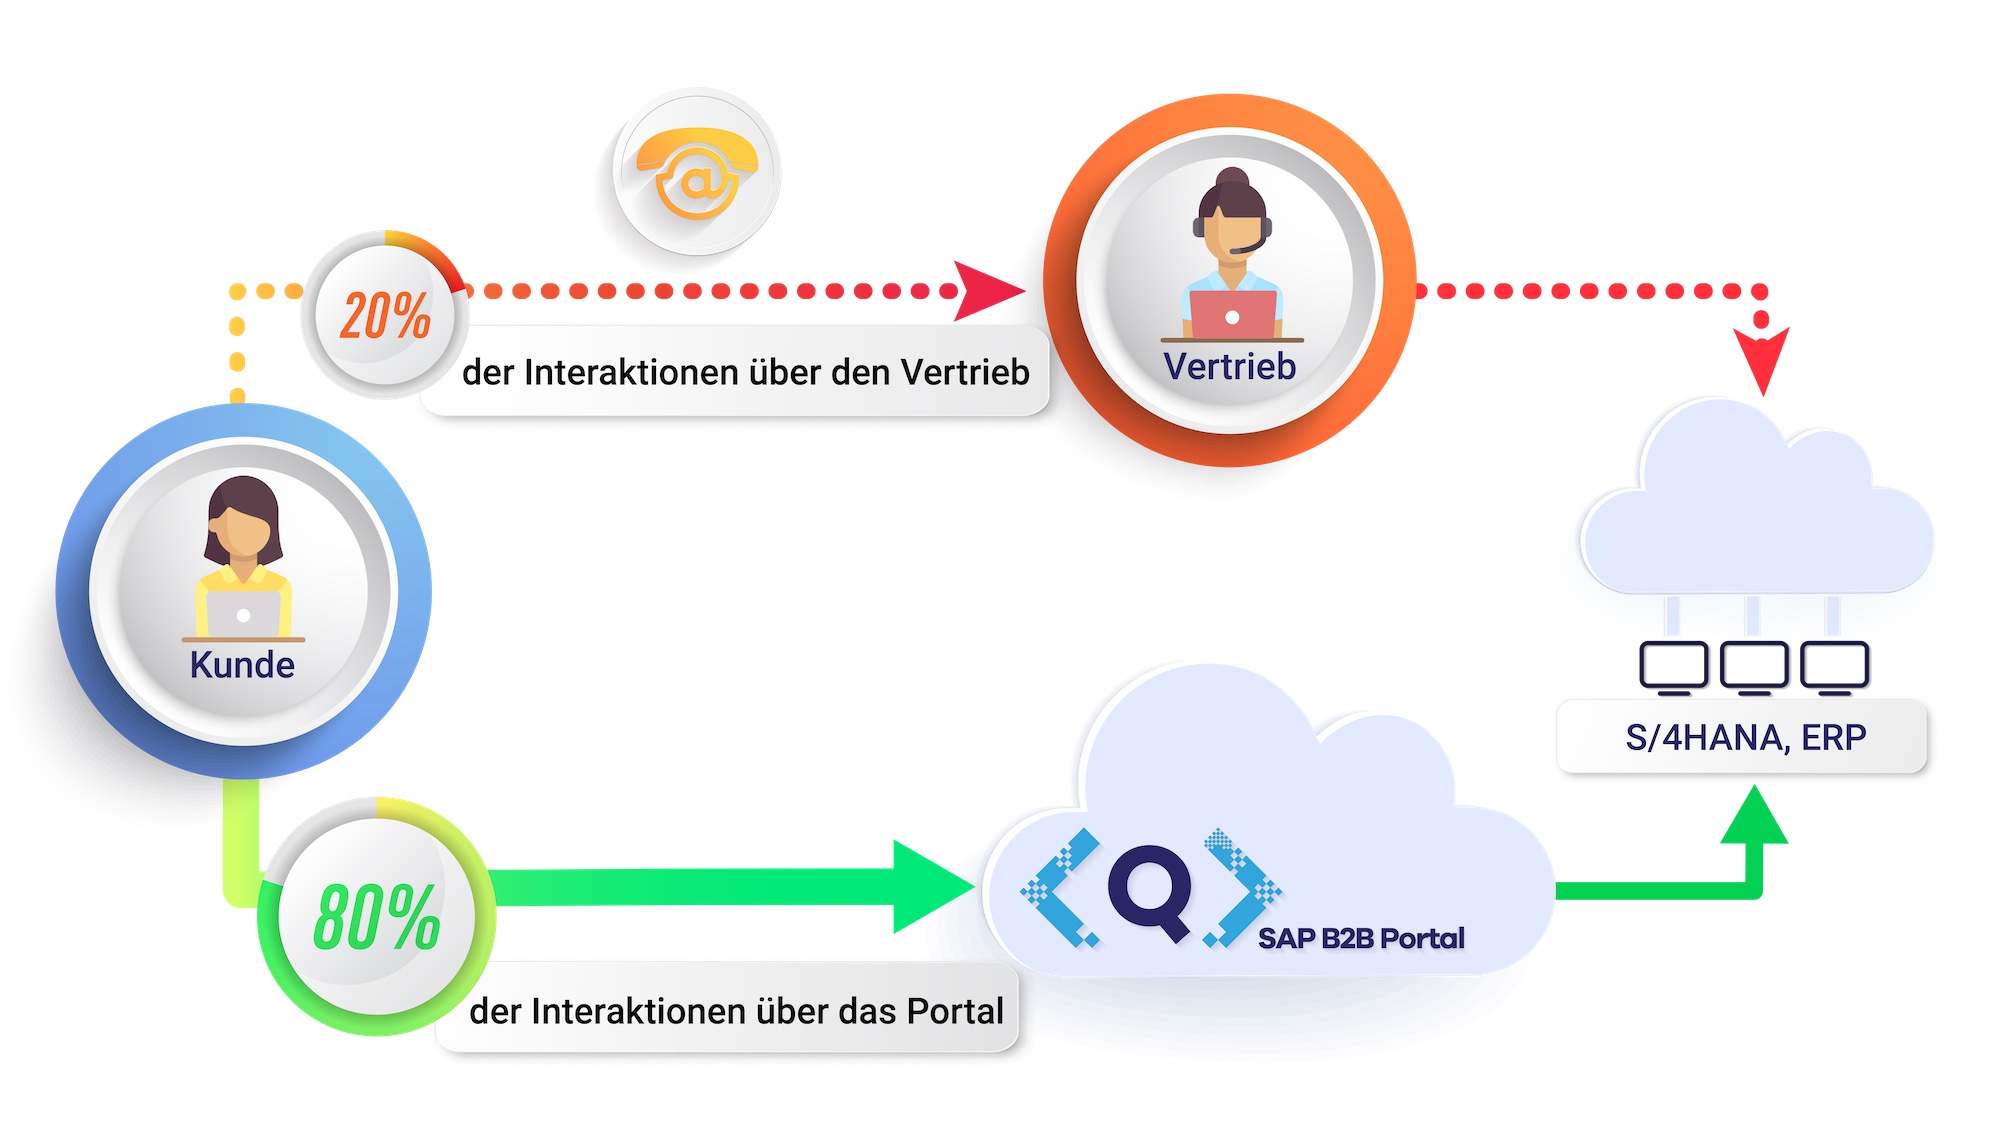 SAP B2B Portal customer interactions